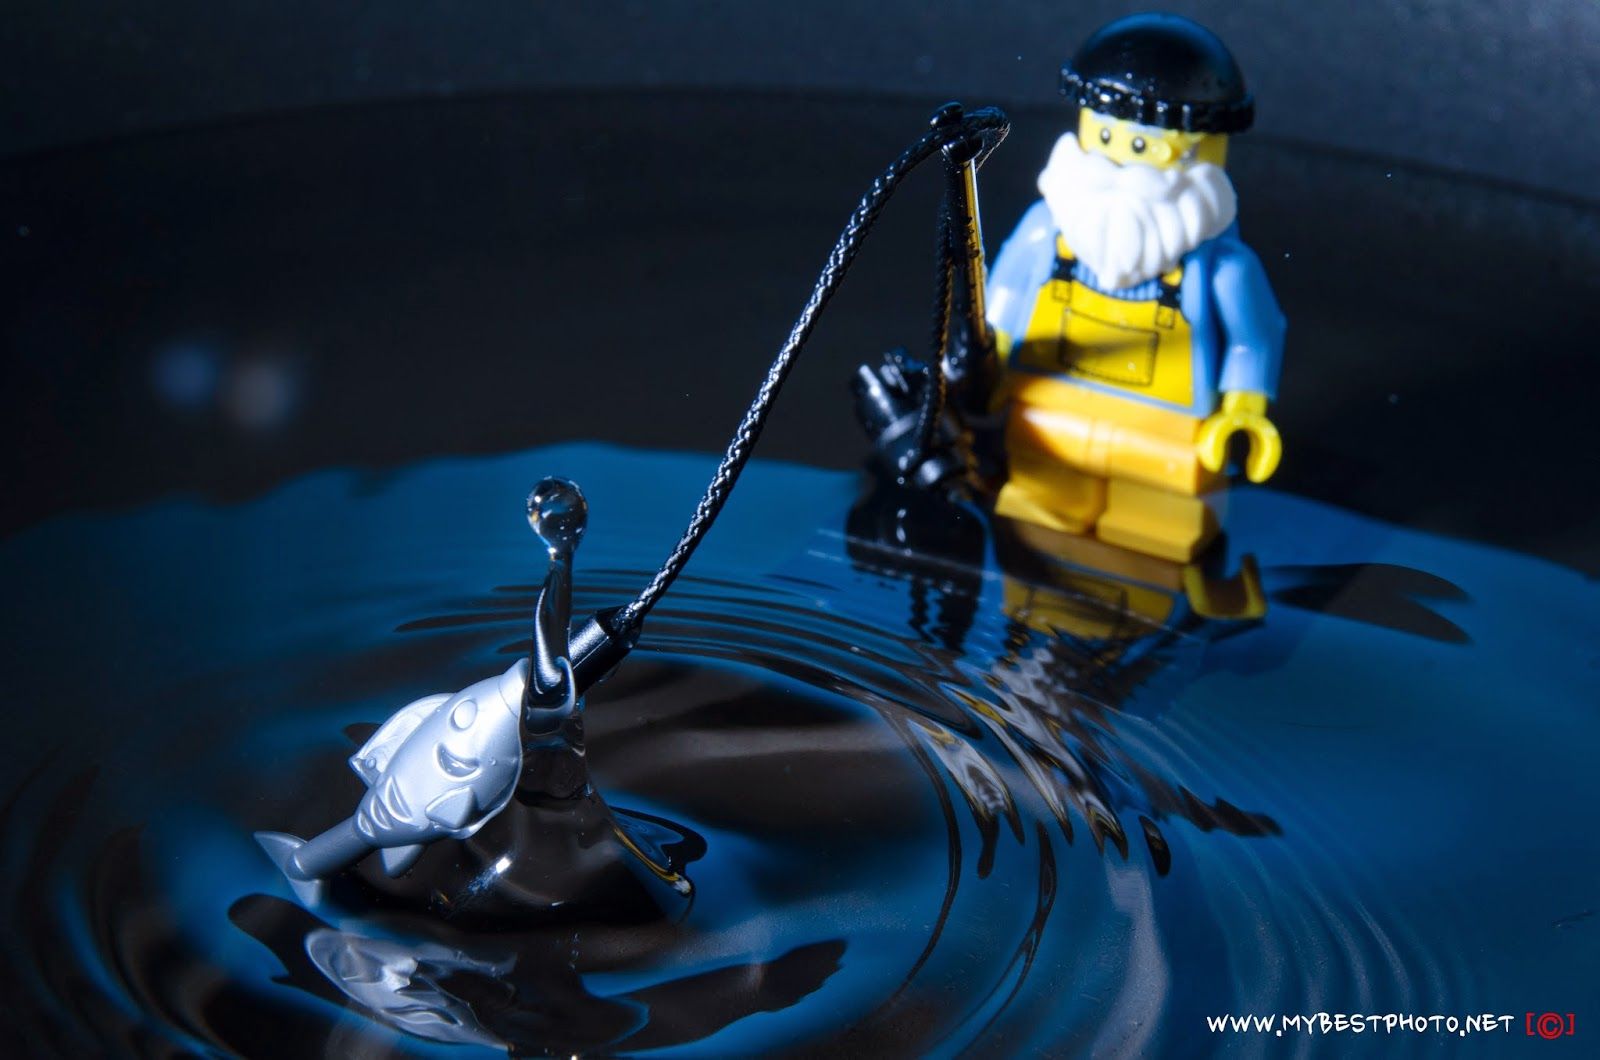 Lego Minifigures in the Wild: Lego Minifigure Series 3 Fisherman. Lego minifigures, Mini figures, Lego